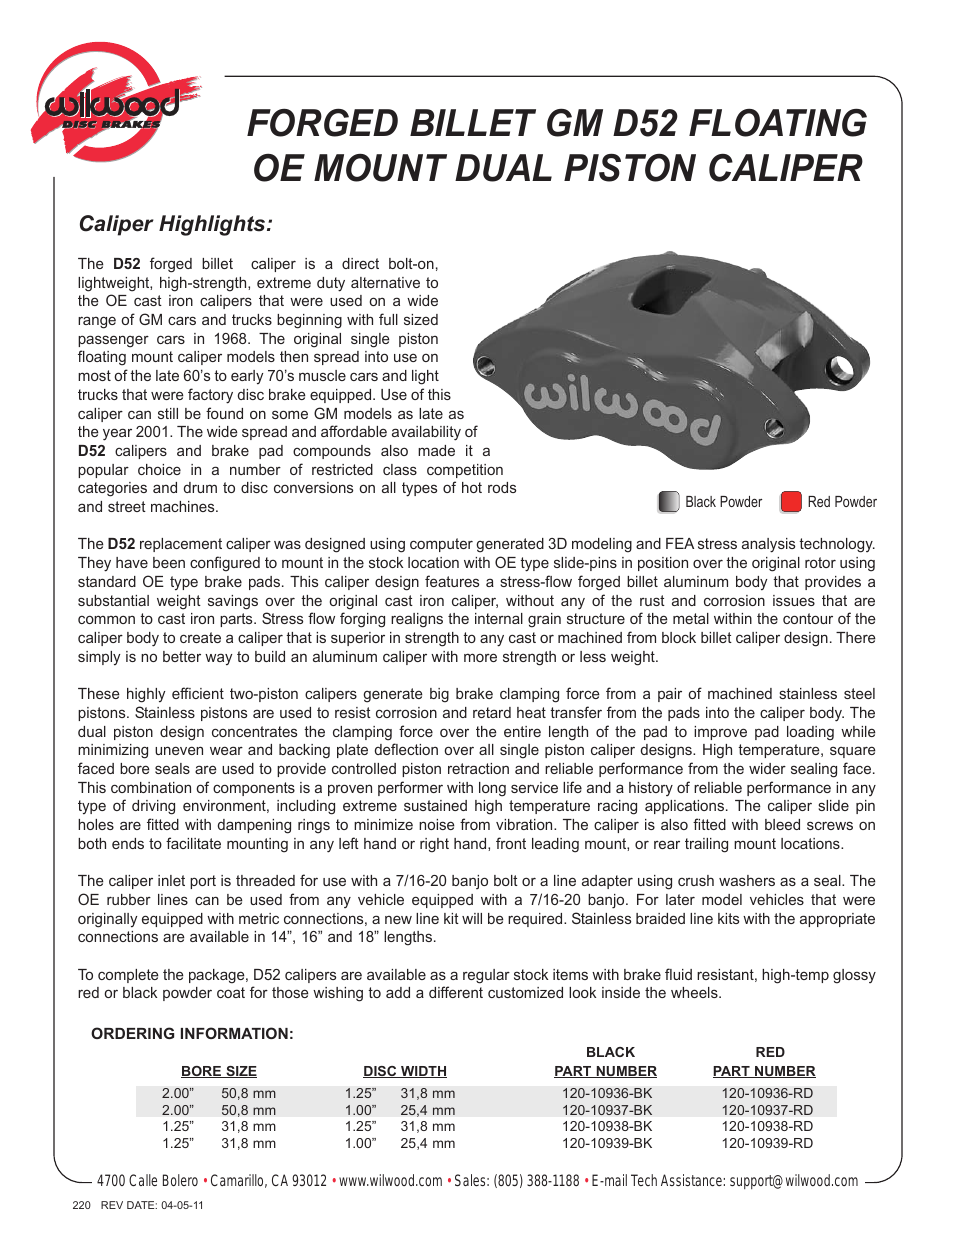 D52 Dual Piston Floater